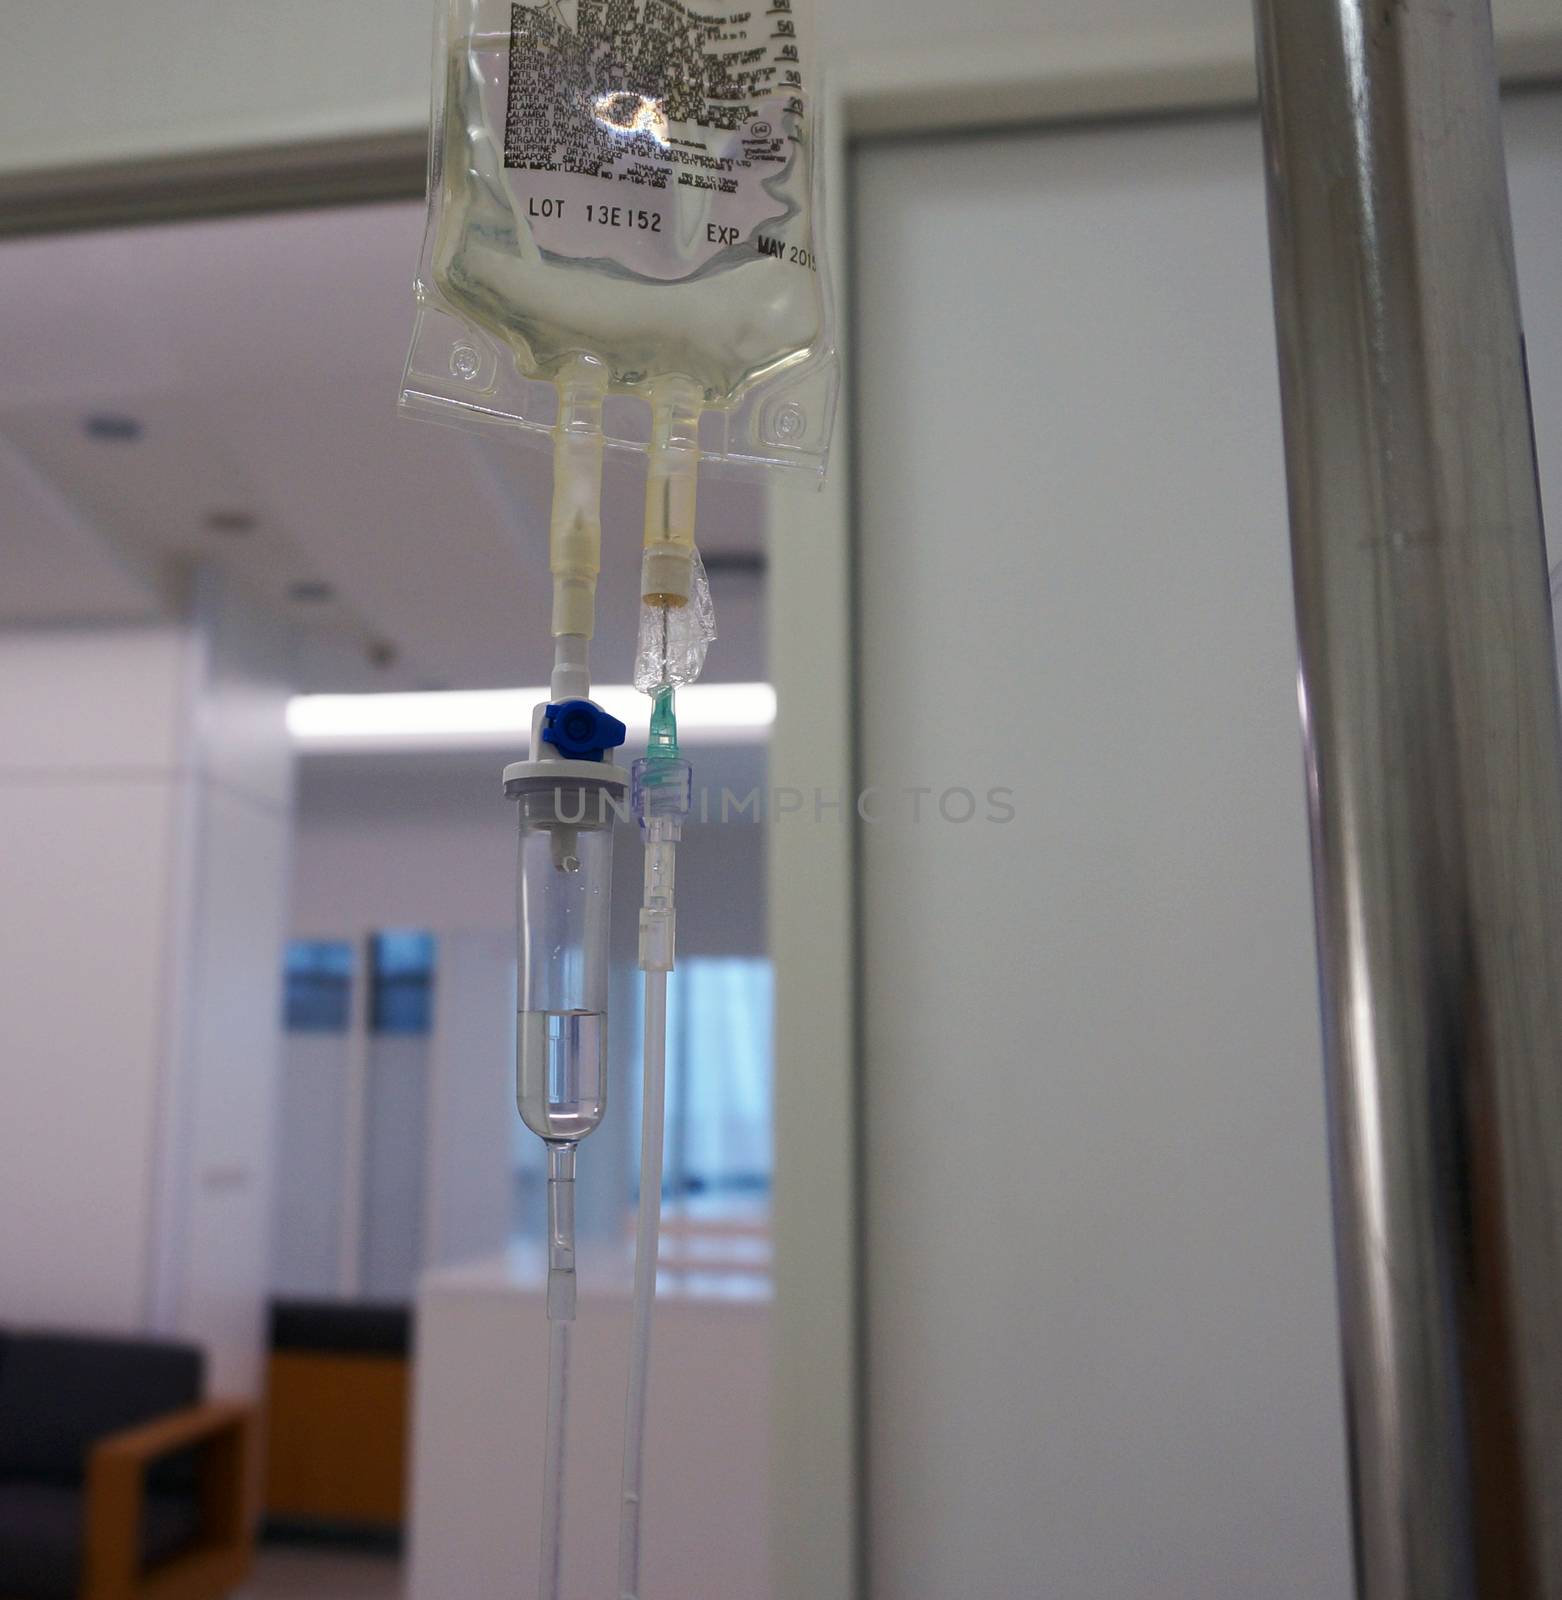 IV fluid in patient room by ninun